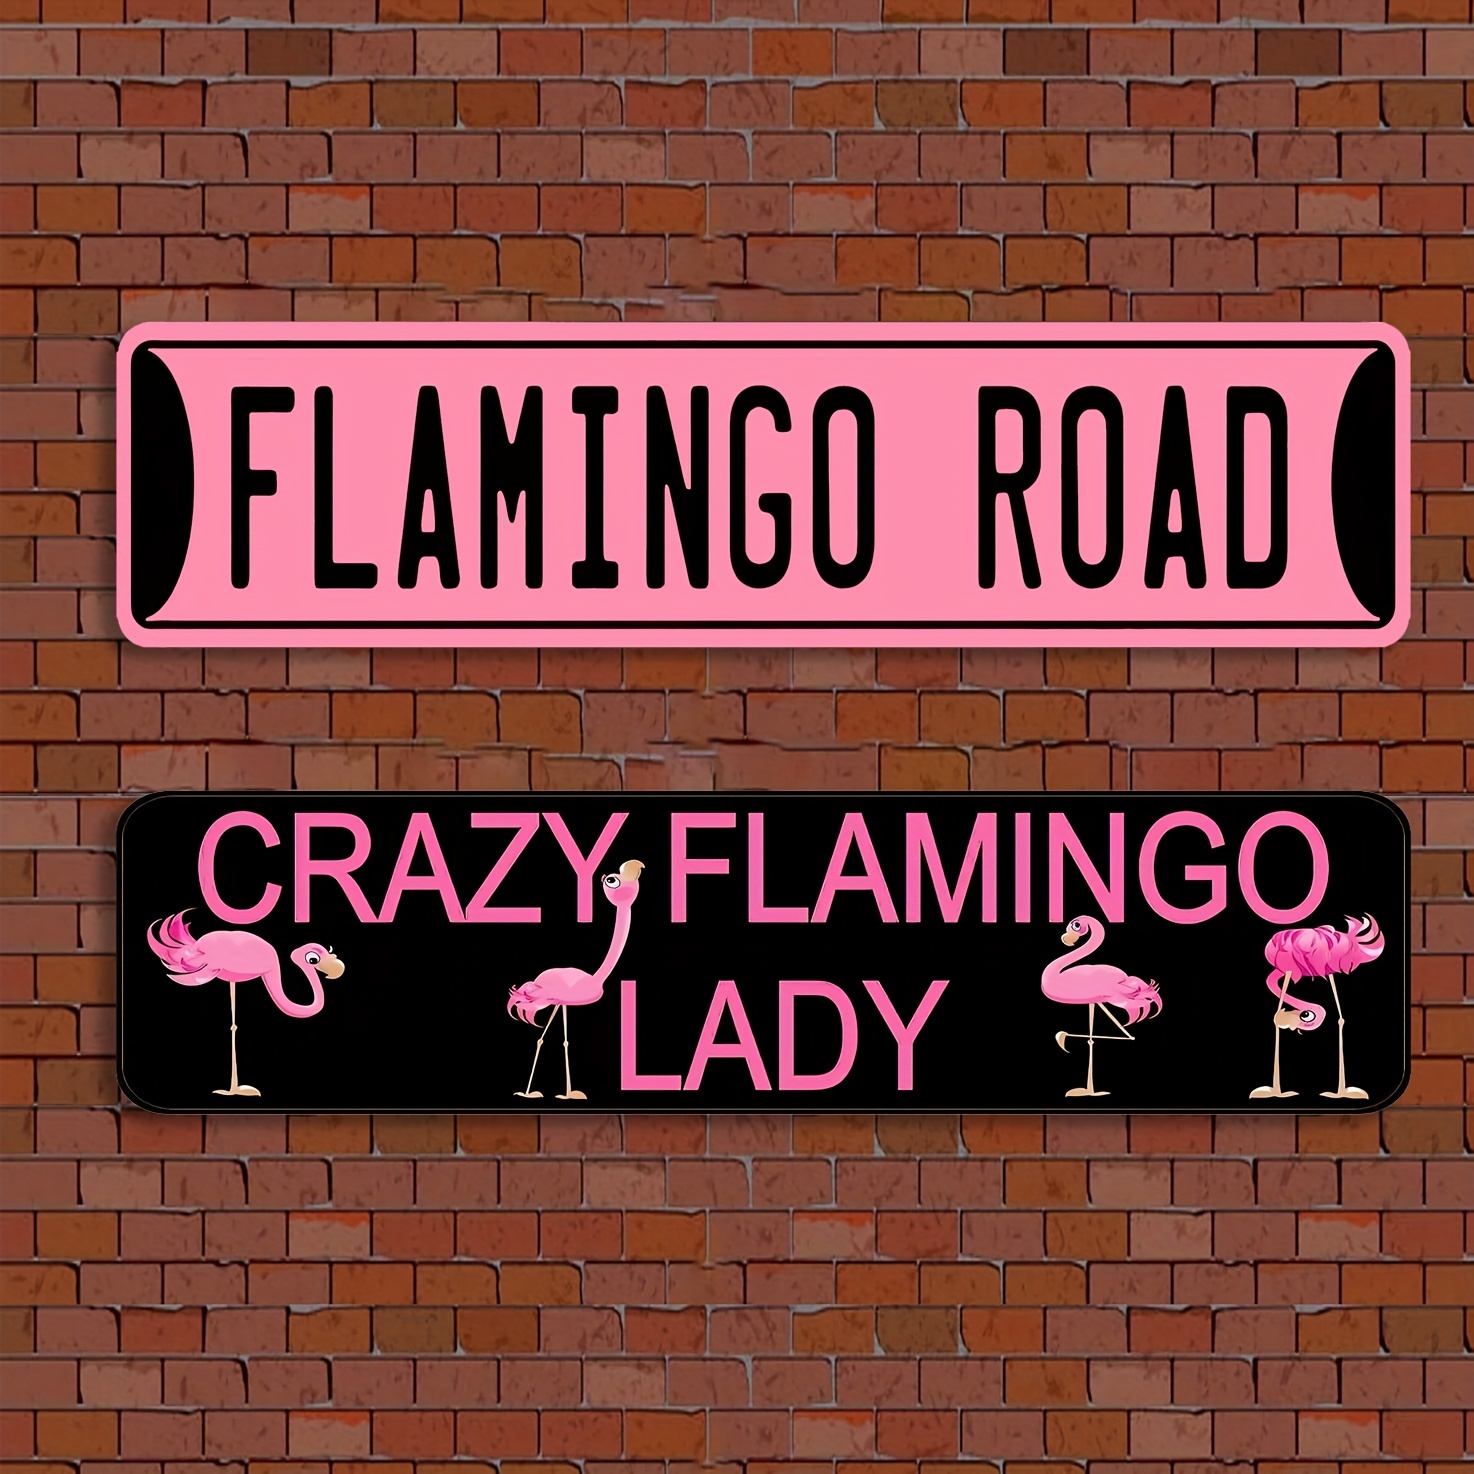 

1pc Retro Metal Sign, Crazy Flamingo Lady Flamingo Road, Hanging Aluminum Wall Sign, For Bedroom Kitchen Garden Wall Pub Club Coffee Hanging Sign Decor, 4inchx16inch/10cmx40cm